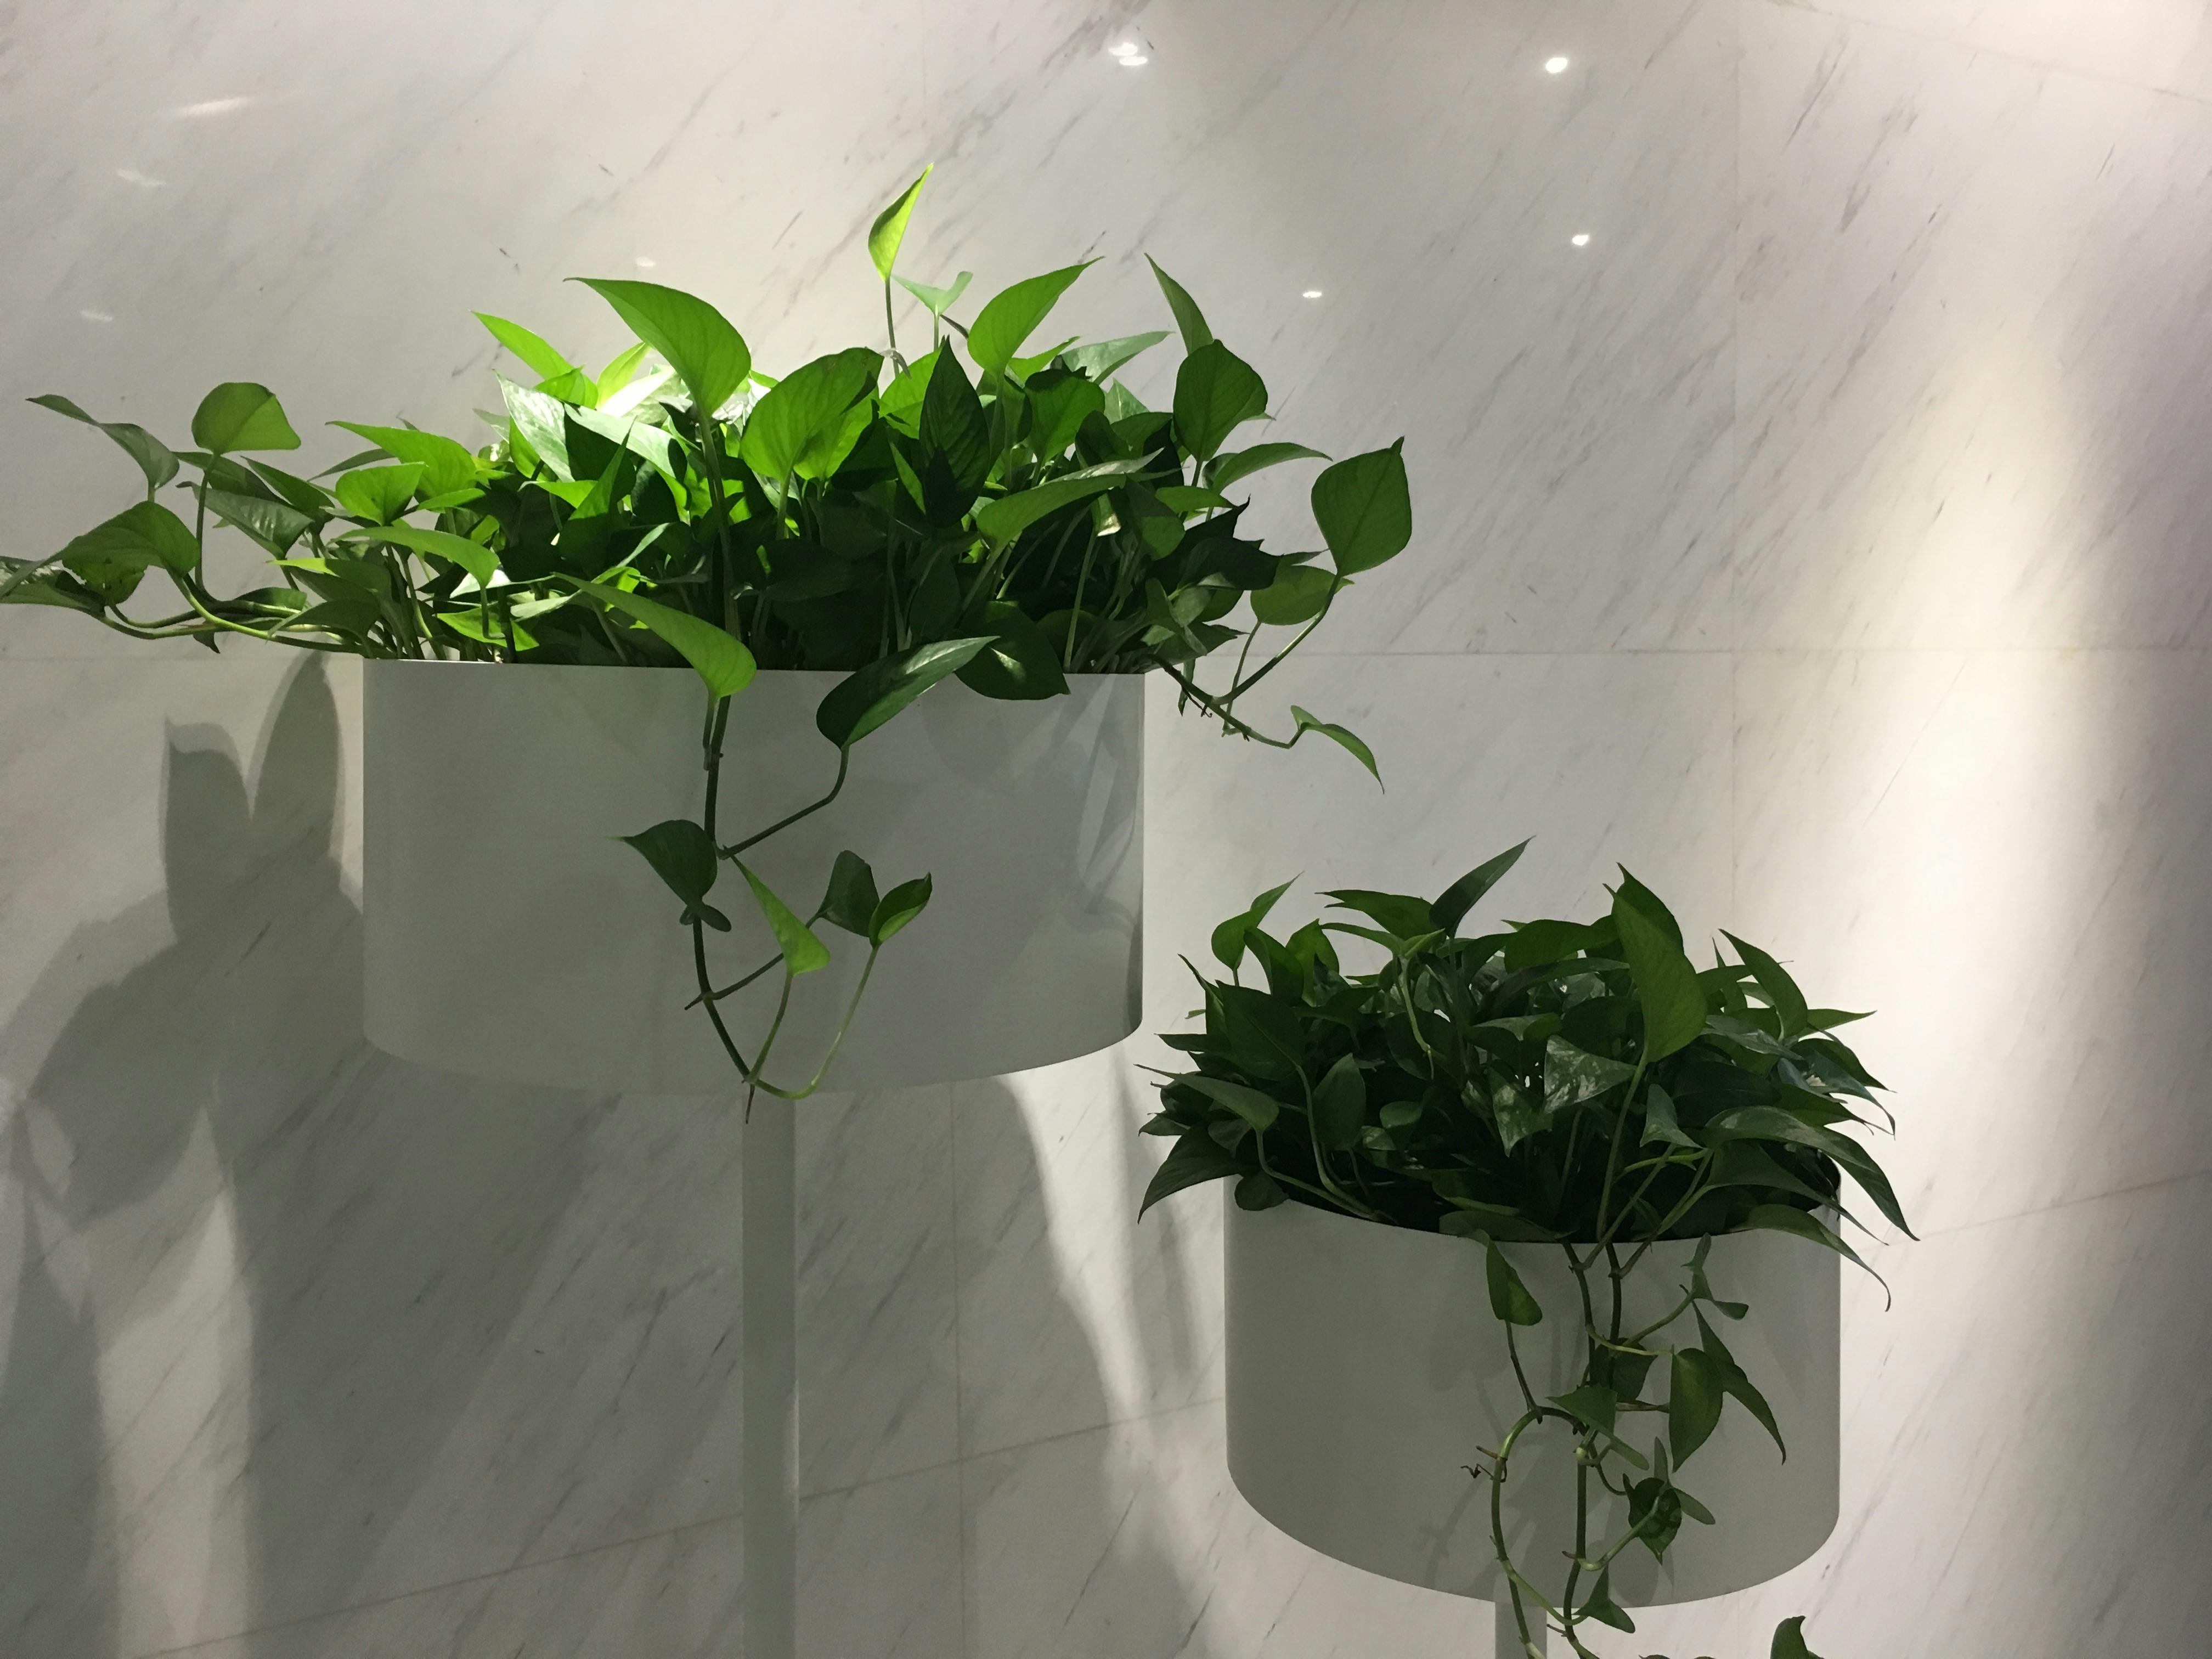 Free stock photo of office plants, plants